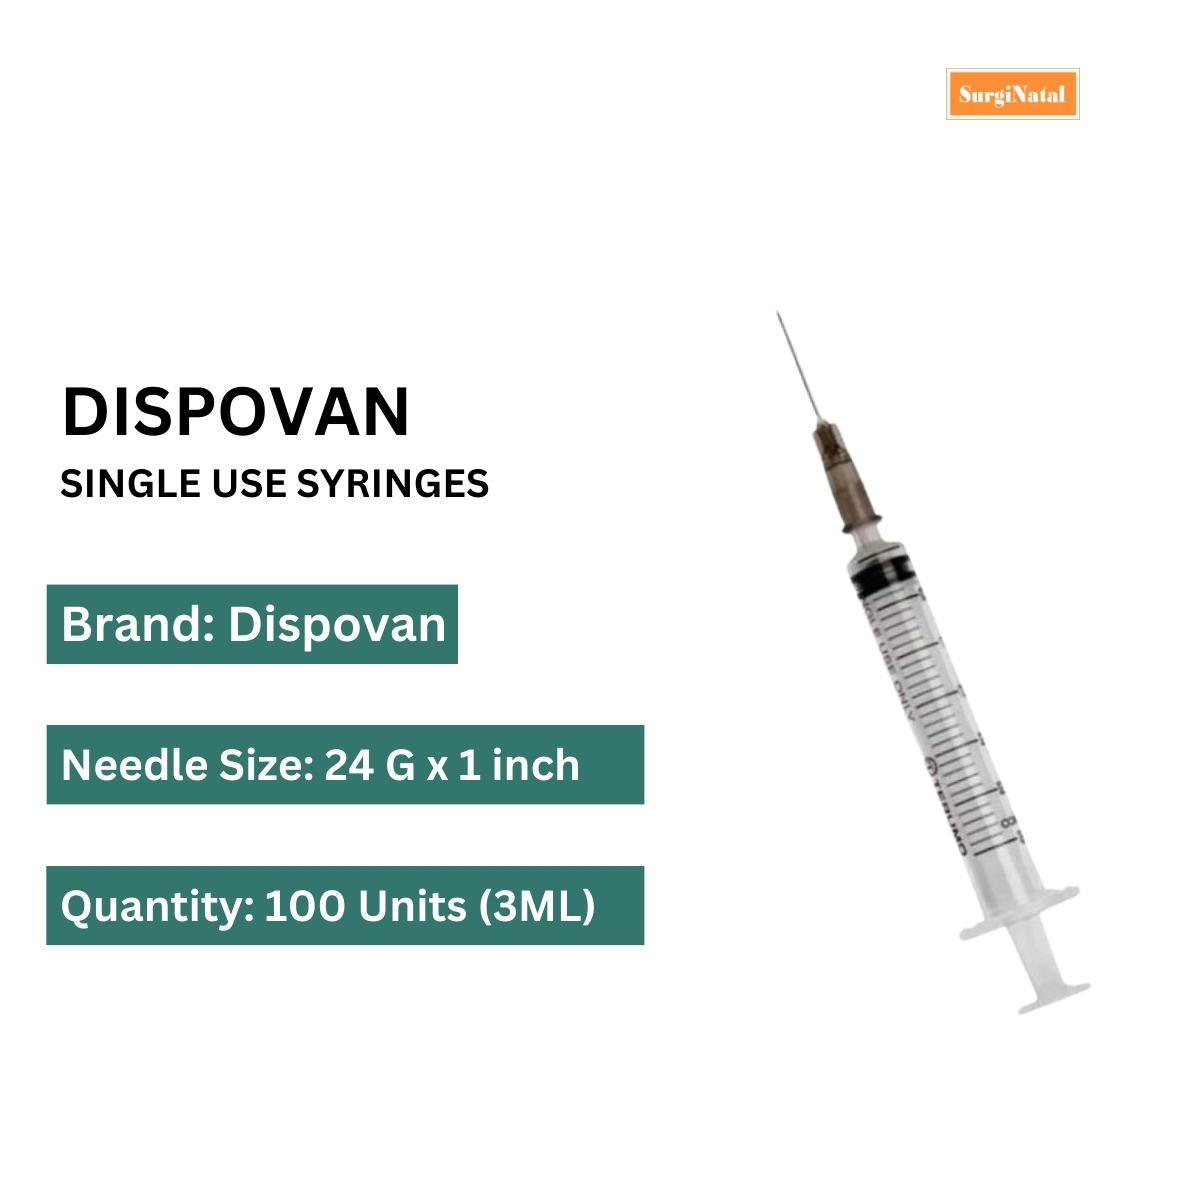 dispo van 3ml syringe with needle - 100 units pack